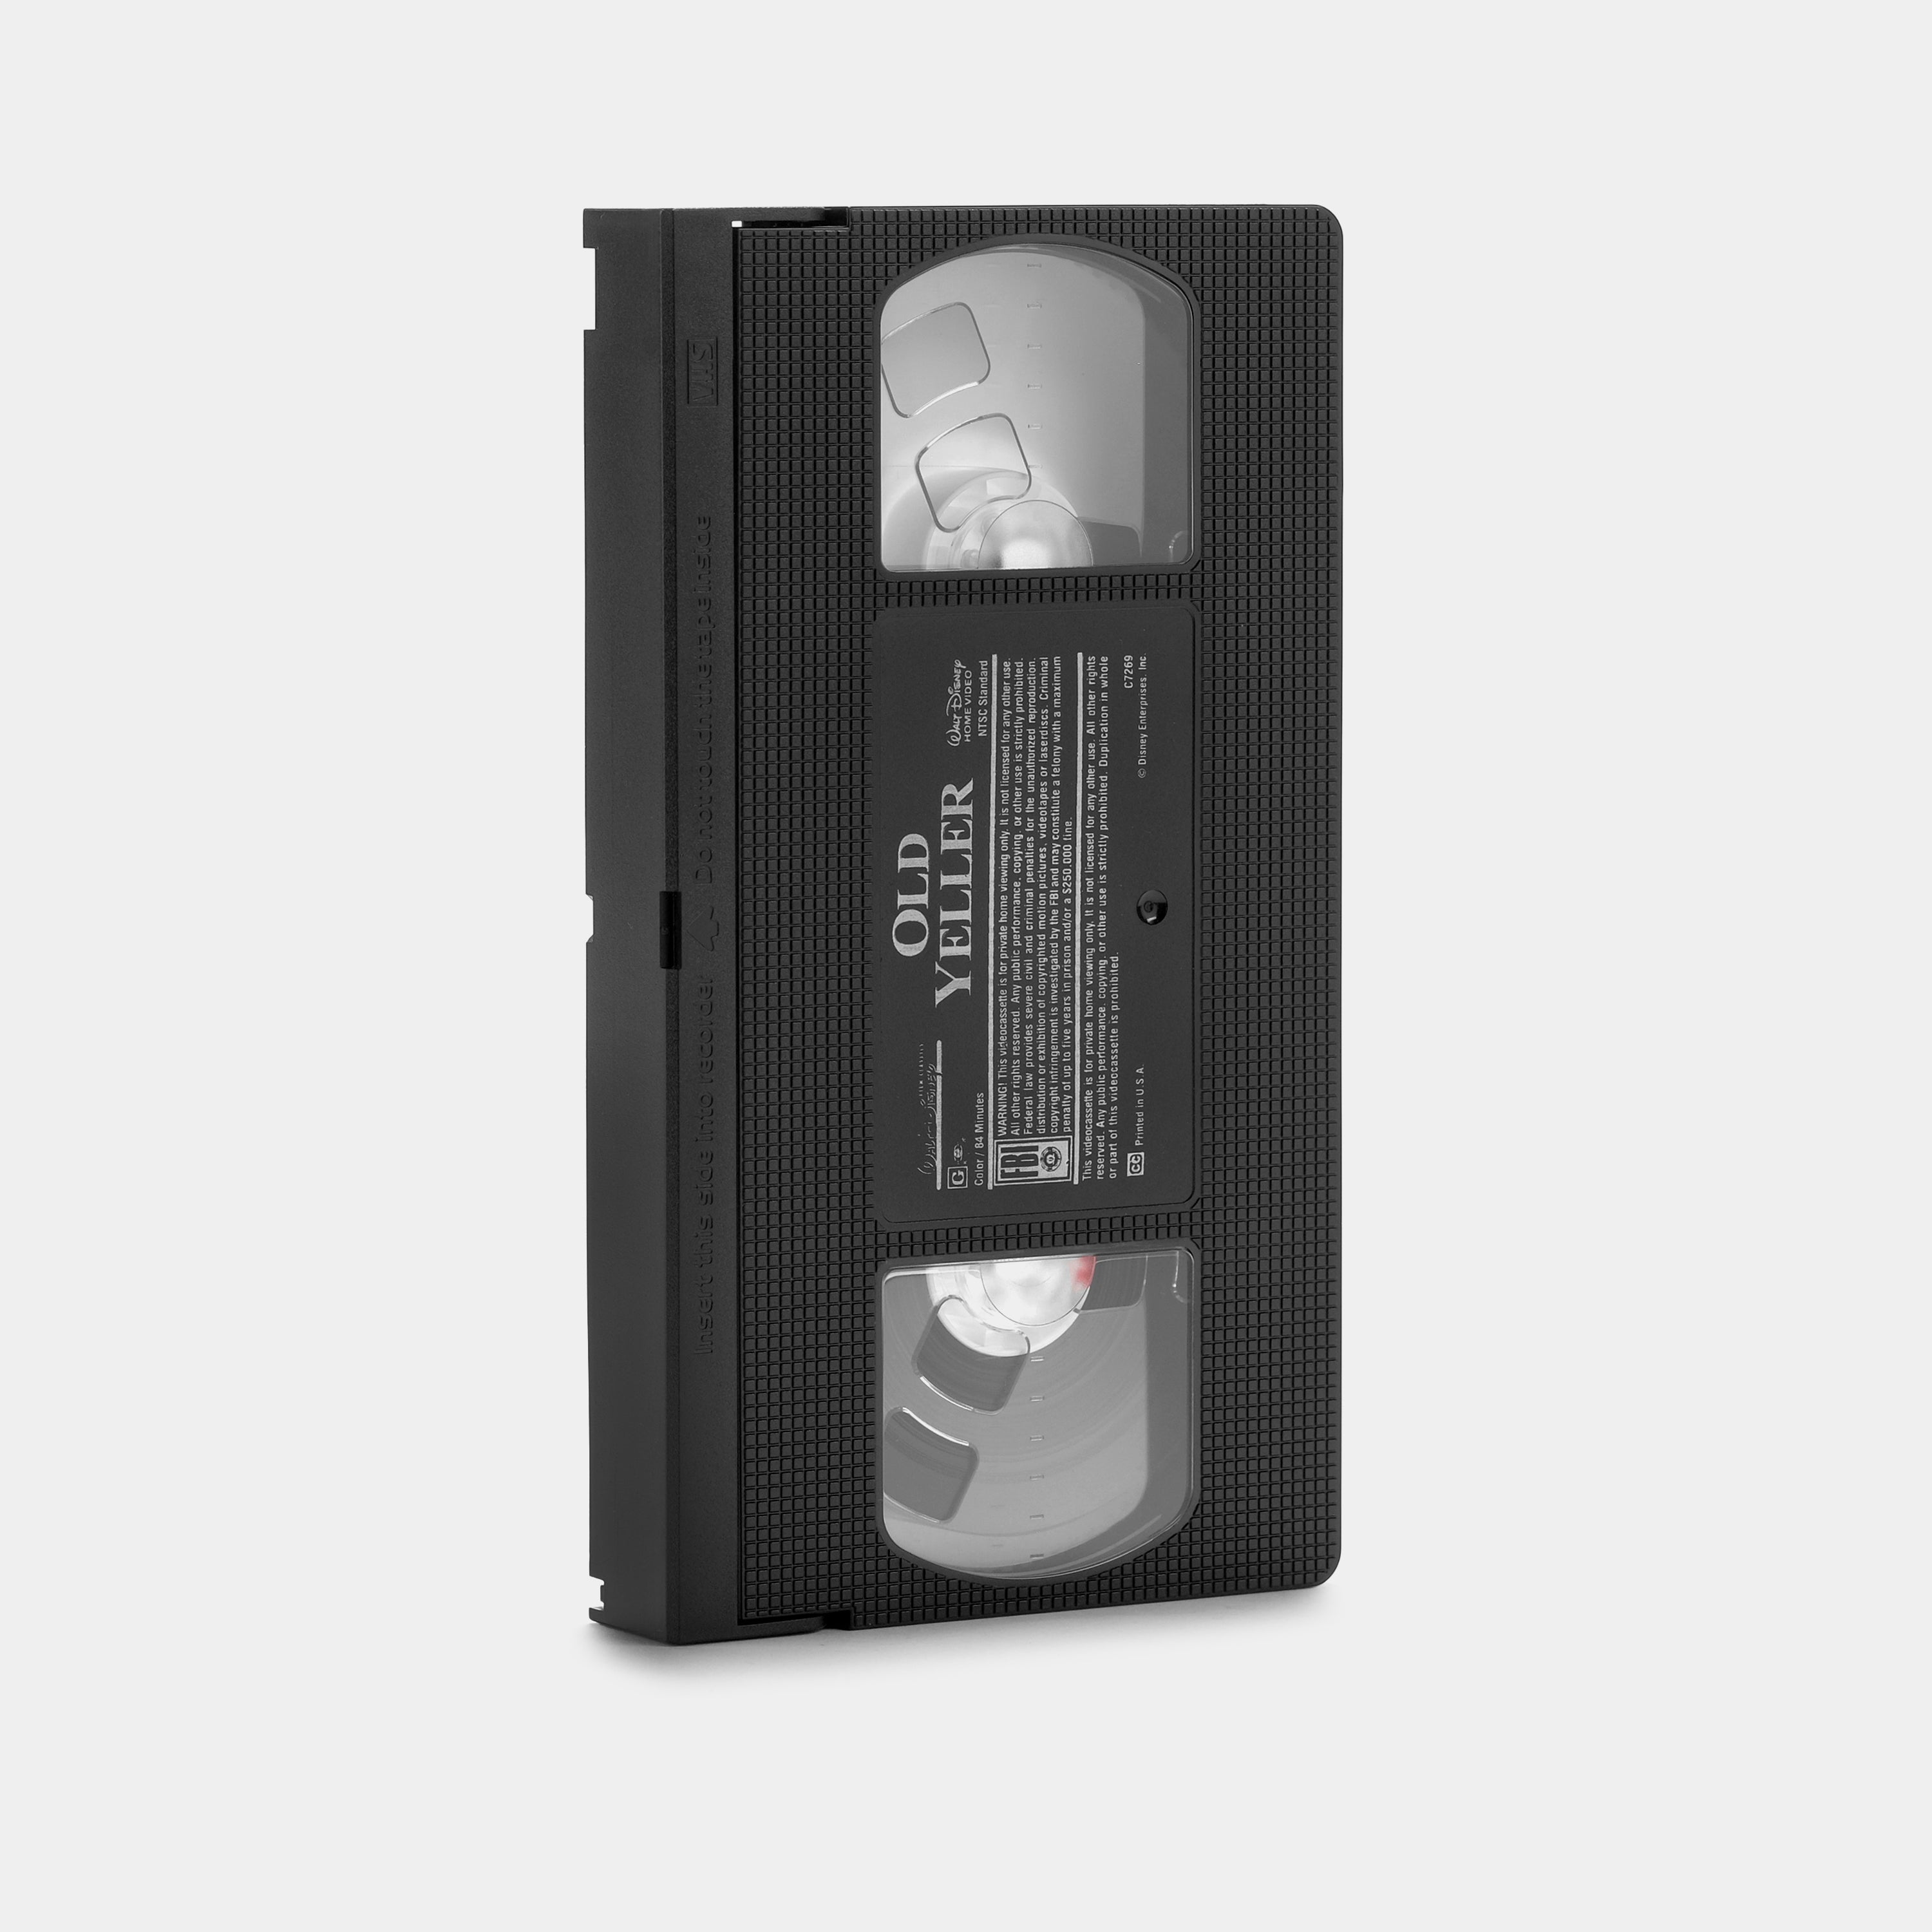 Old Yeller VHS Tape